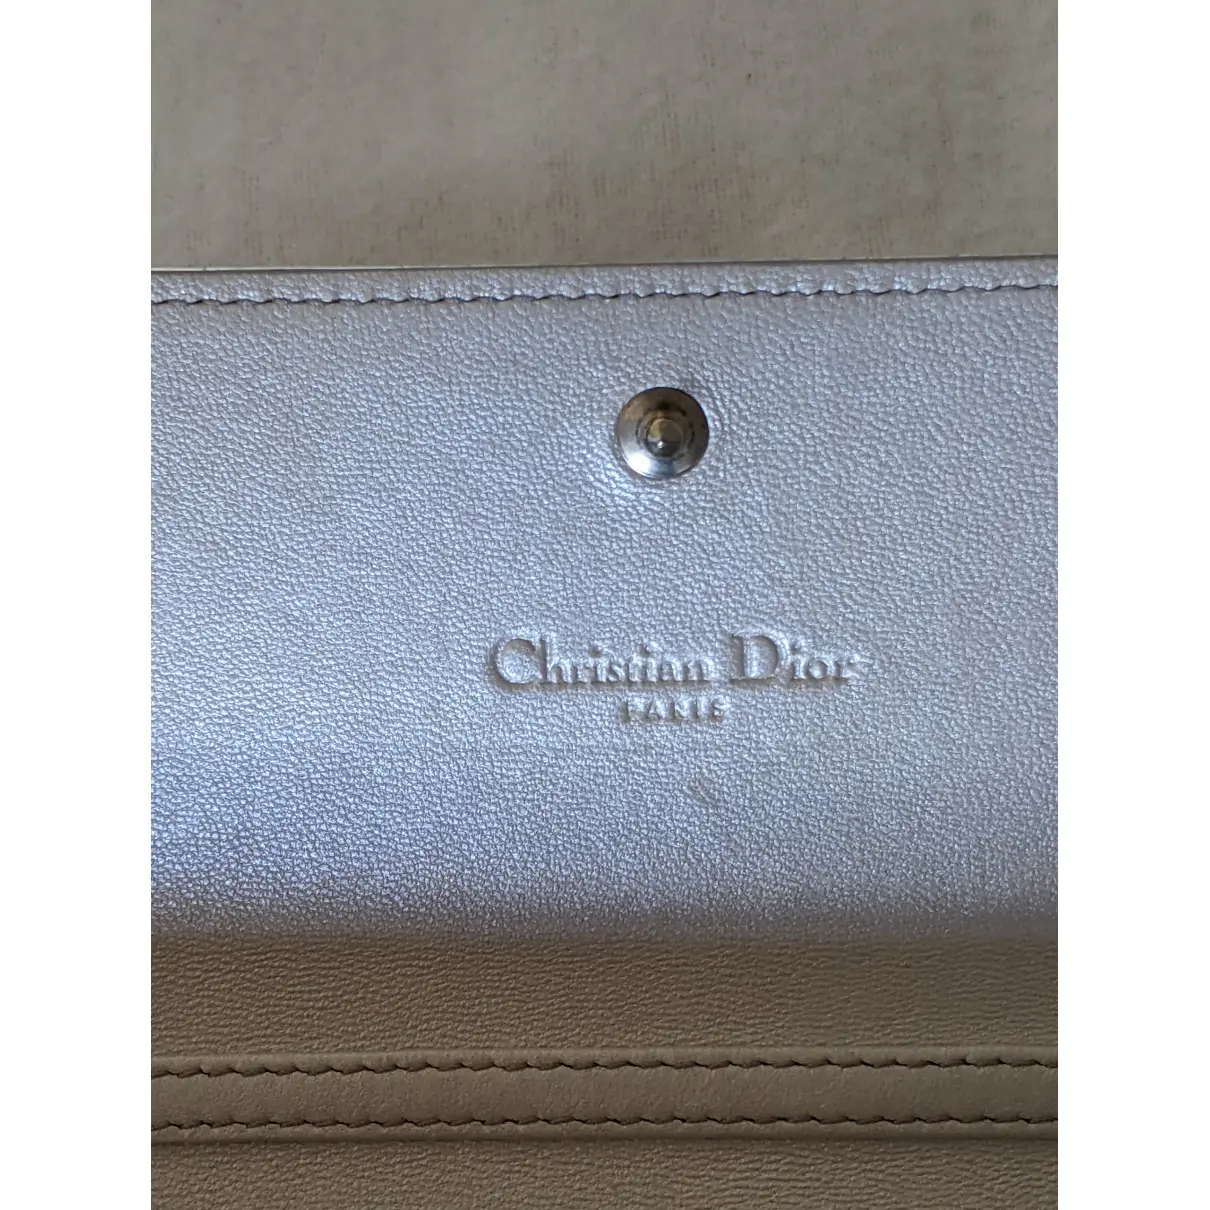 Patent leather clutch bag Dior